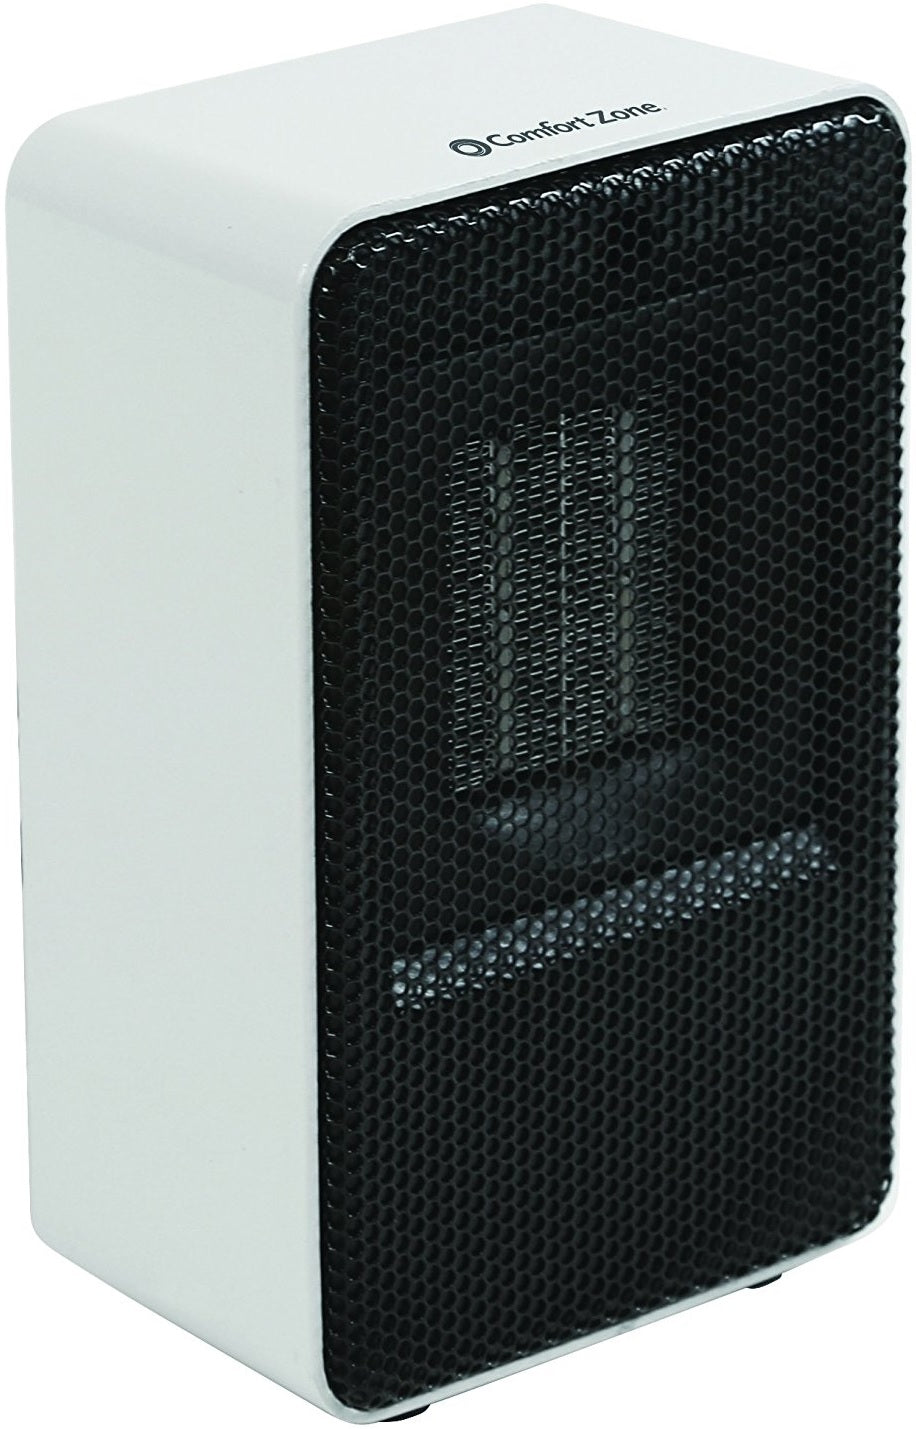 Comfort Zone CZ410WH Personal Desktop Ceramic Heater, 200 Watts